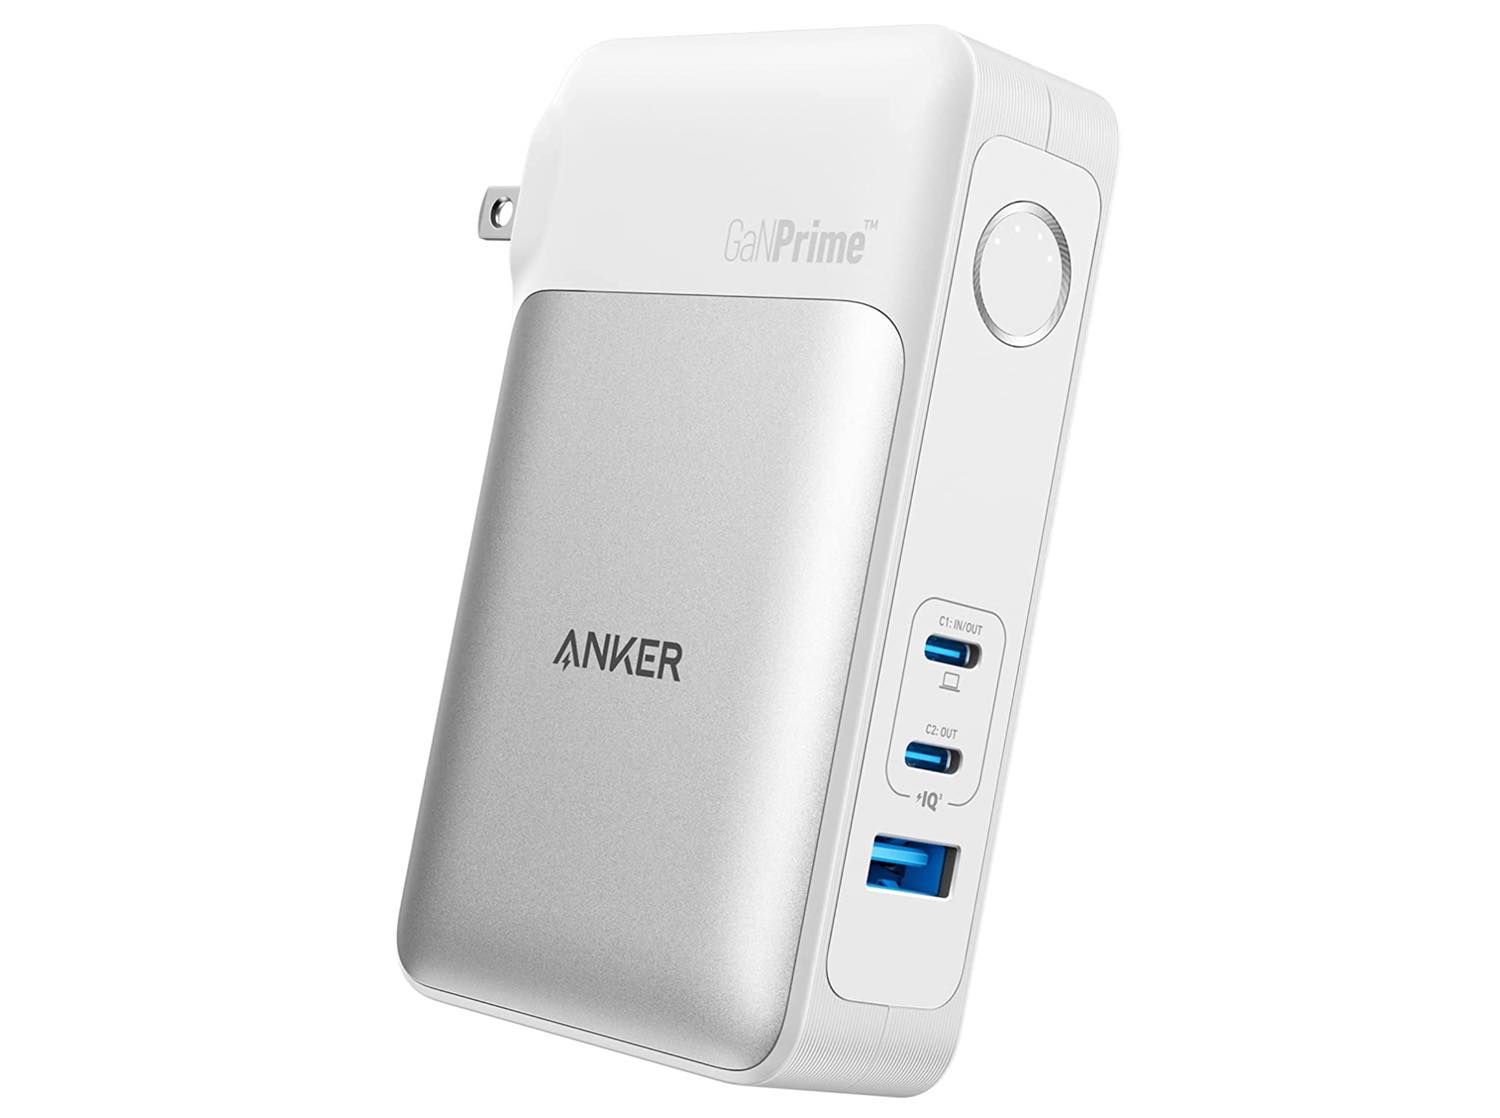 Anker、1台3役のバッテリー搭載USB急速充電器｢Anker 733 Power Bank (GaNPrime PowerCore 65W)｣のホワイトモデルを発売